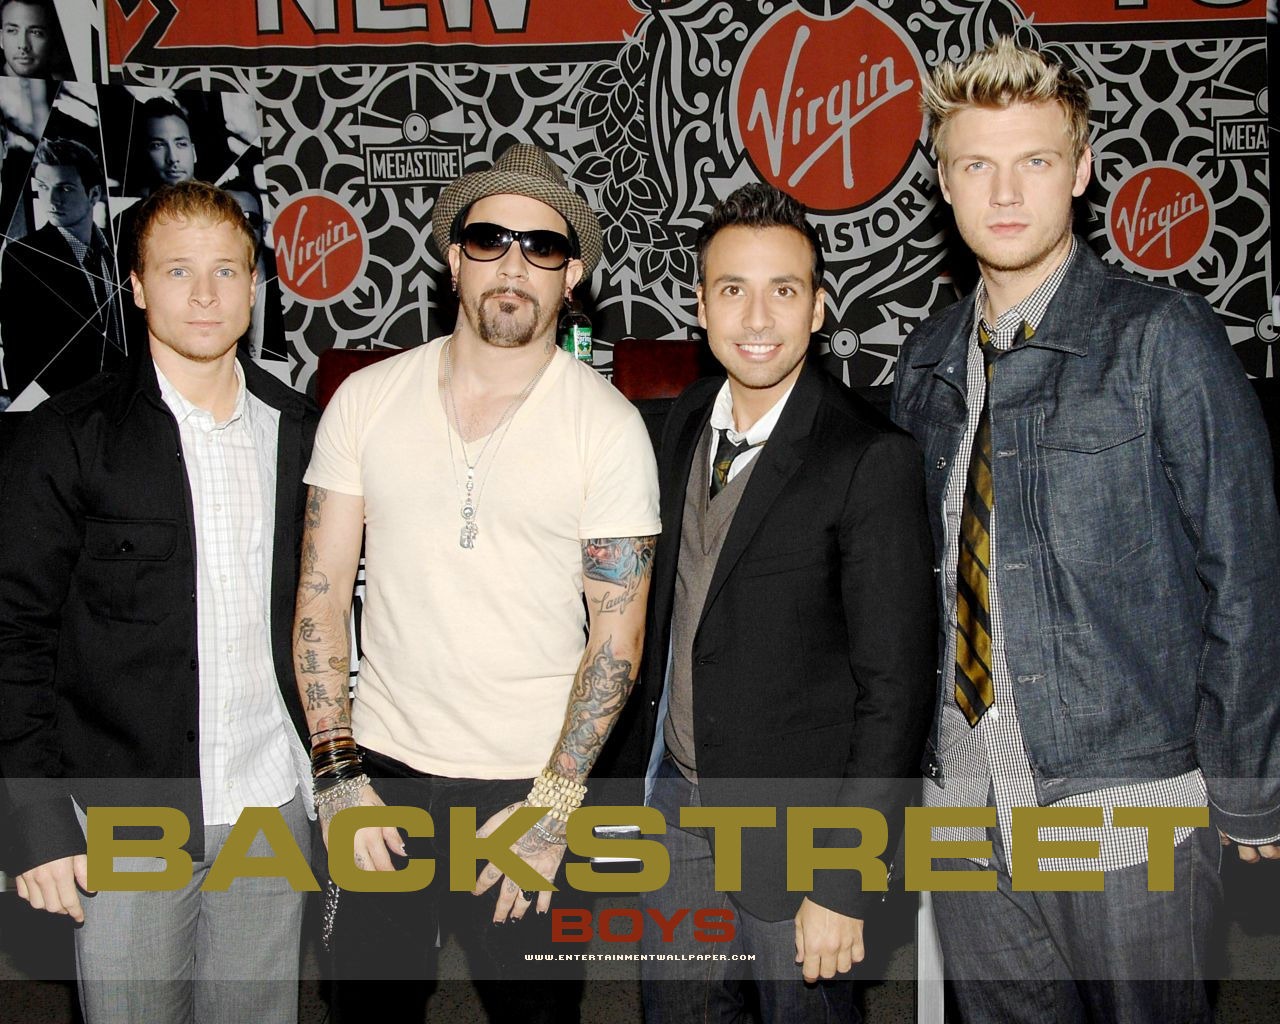 Backstreet Boys wallpaper #6 - 1280x1024